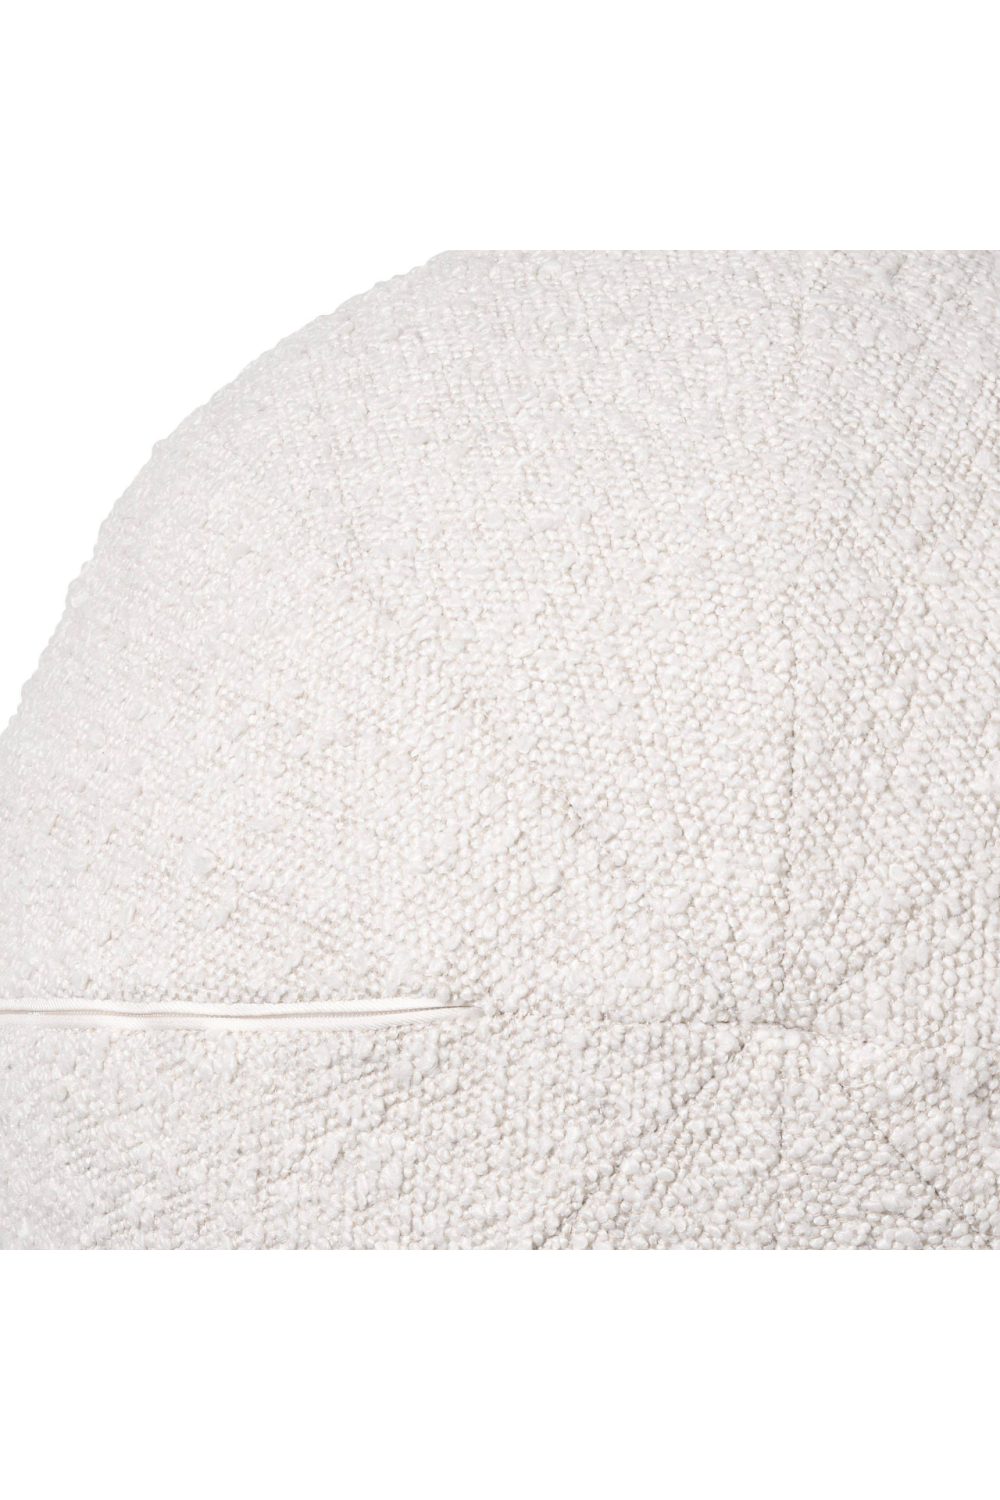 Bouclé Cream Ball Shaped Pillow | Eichholtz Palla L | OROA.com